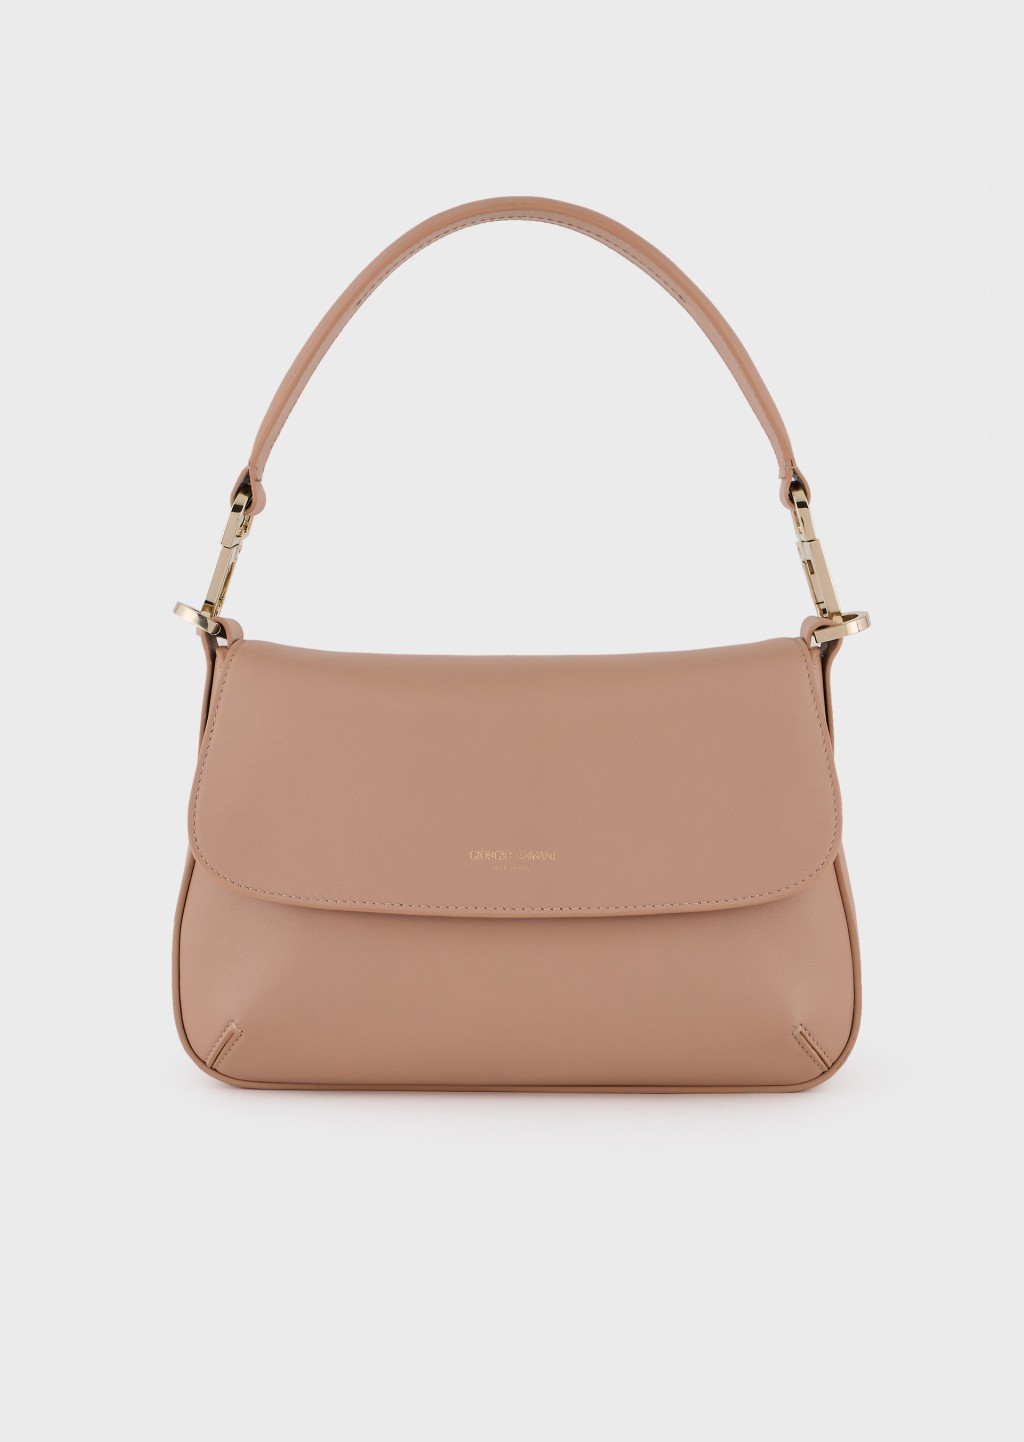 Giorgio Armani La Prima是品牌近季力推手袋之一，換上粉色調Nappa皮革，柔和清新。$17,500